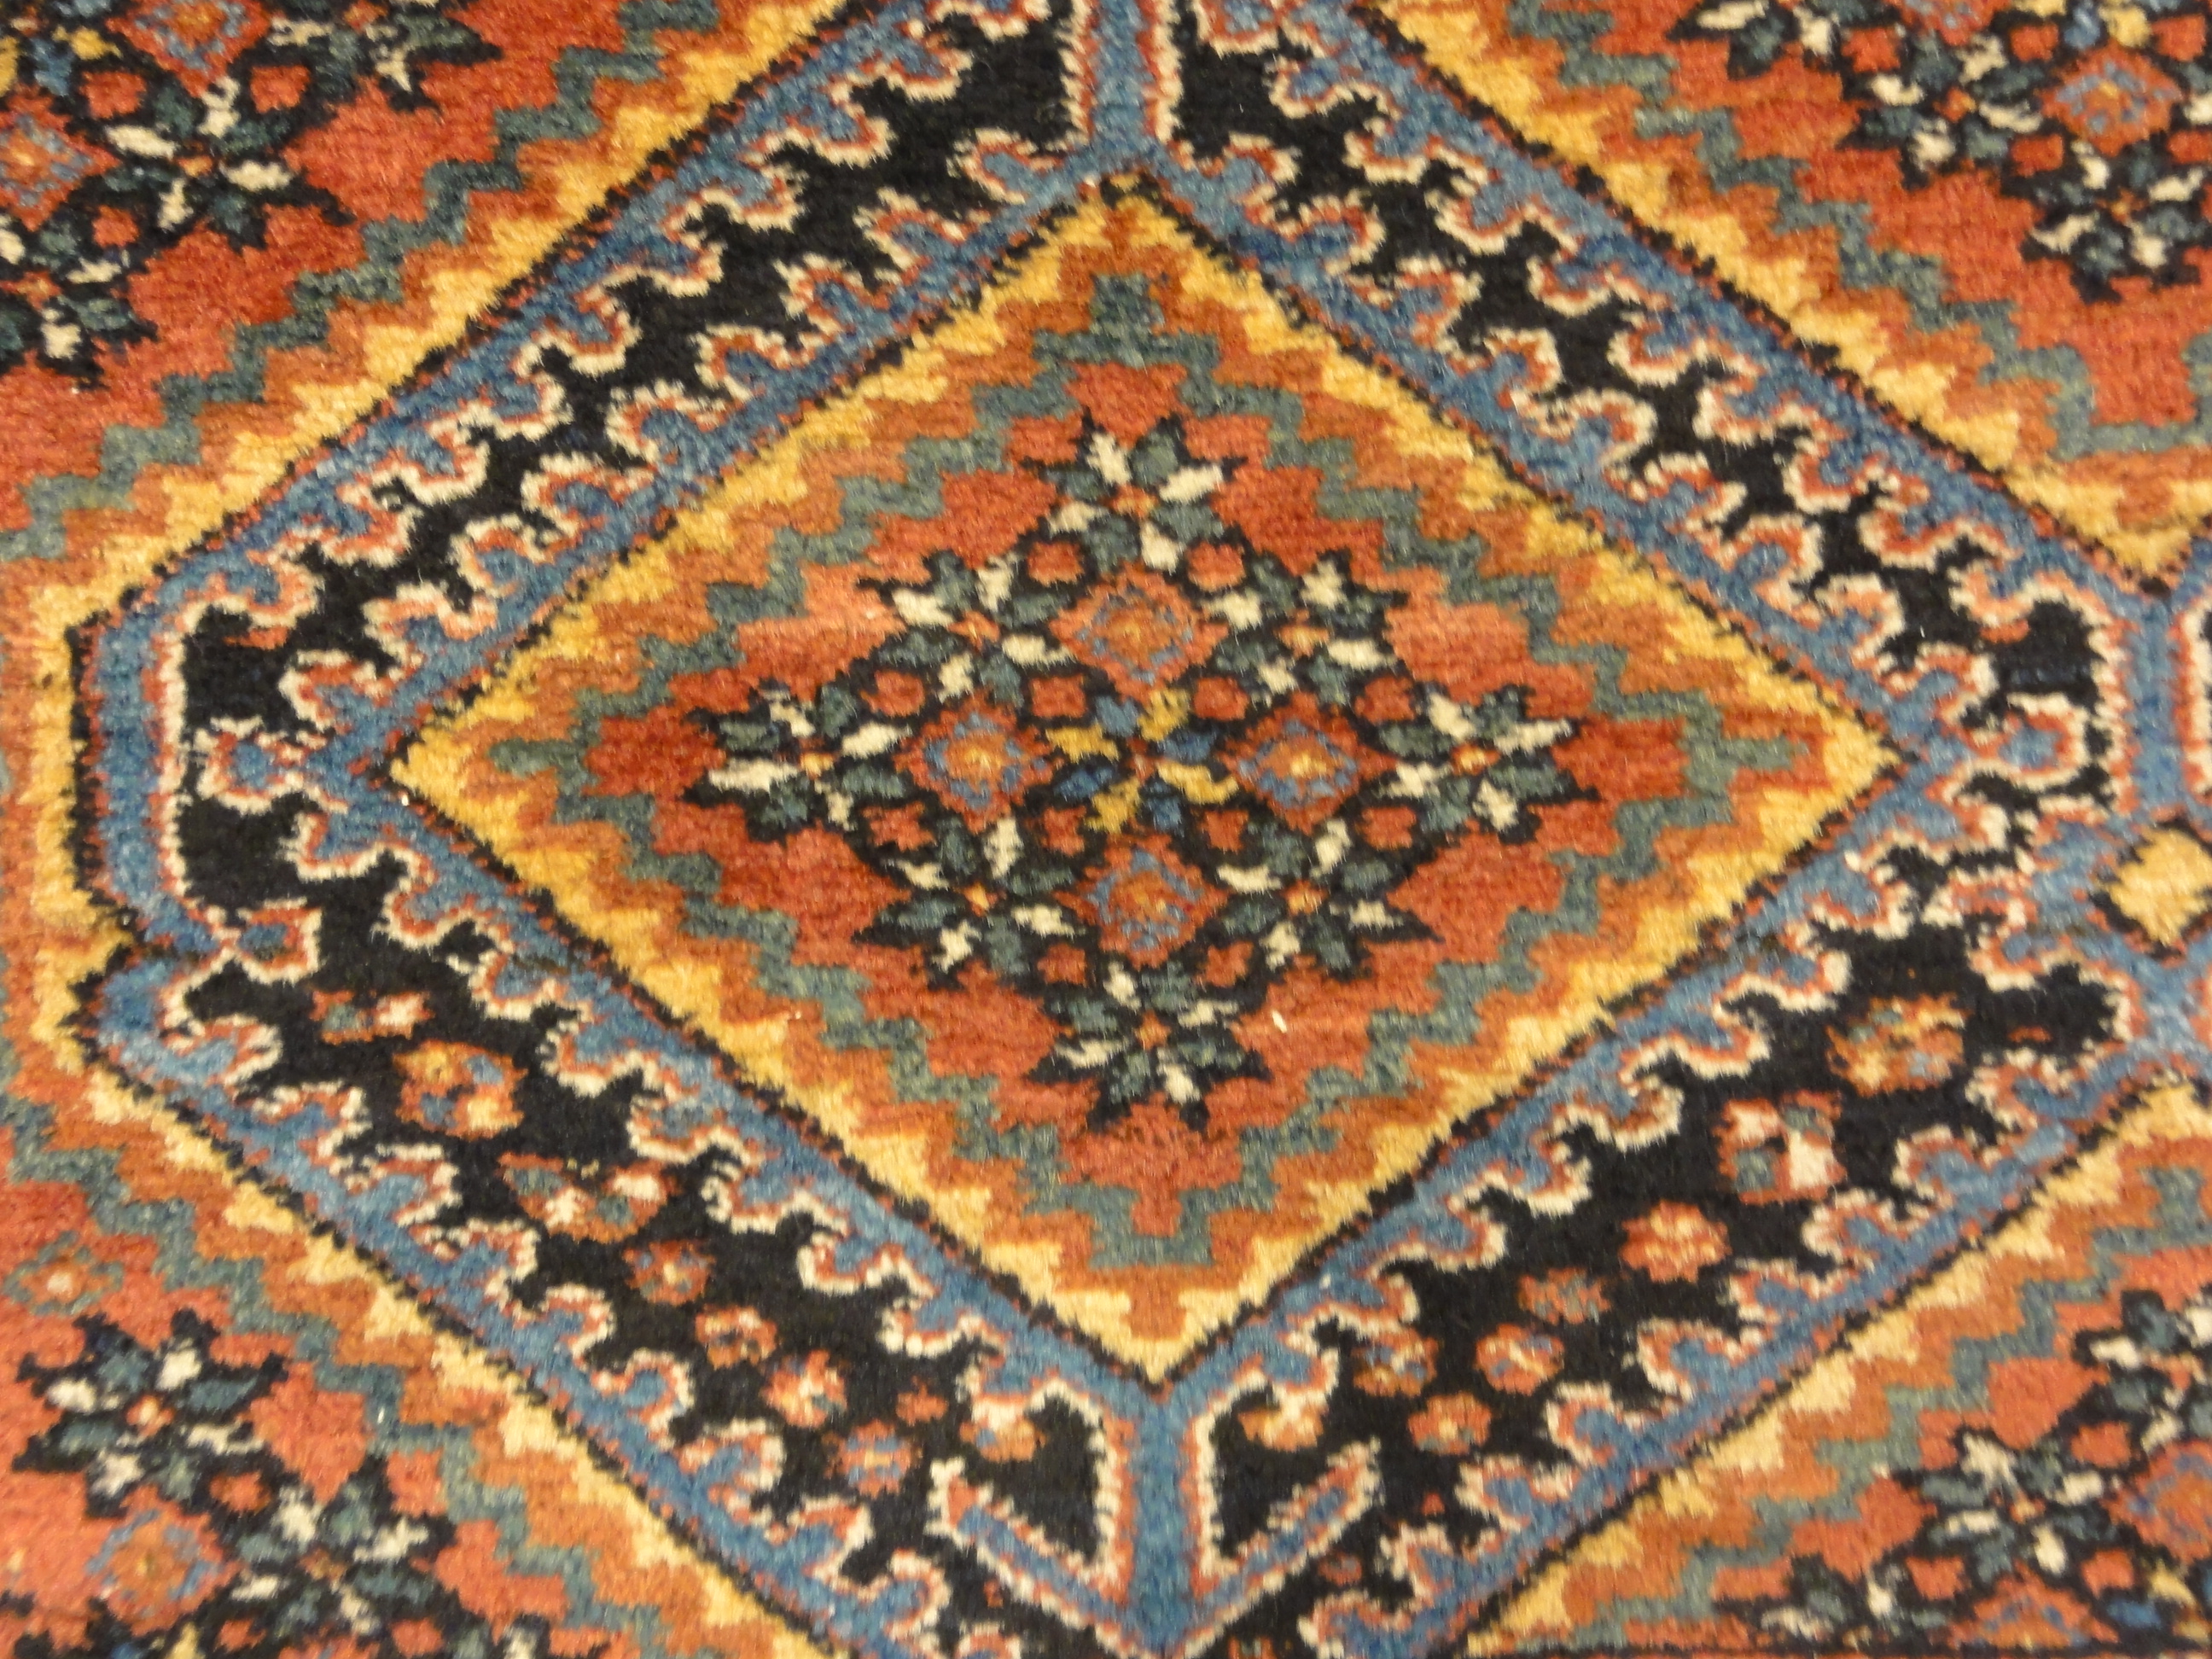 An antique Persian Afshar rug featuring a diamond pattern. A piece of genuine original woven carpet art sold by the Santa Barbara Design Center.